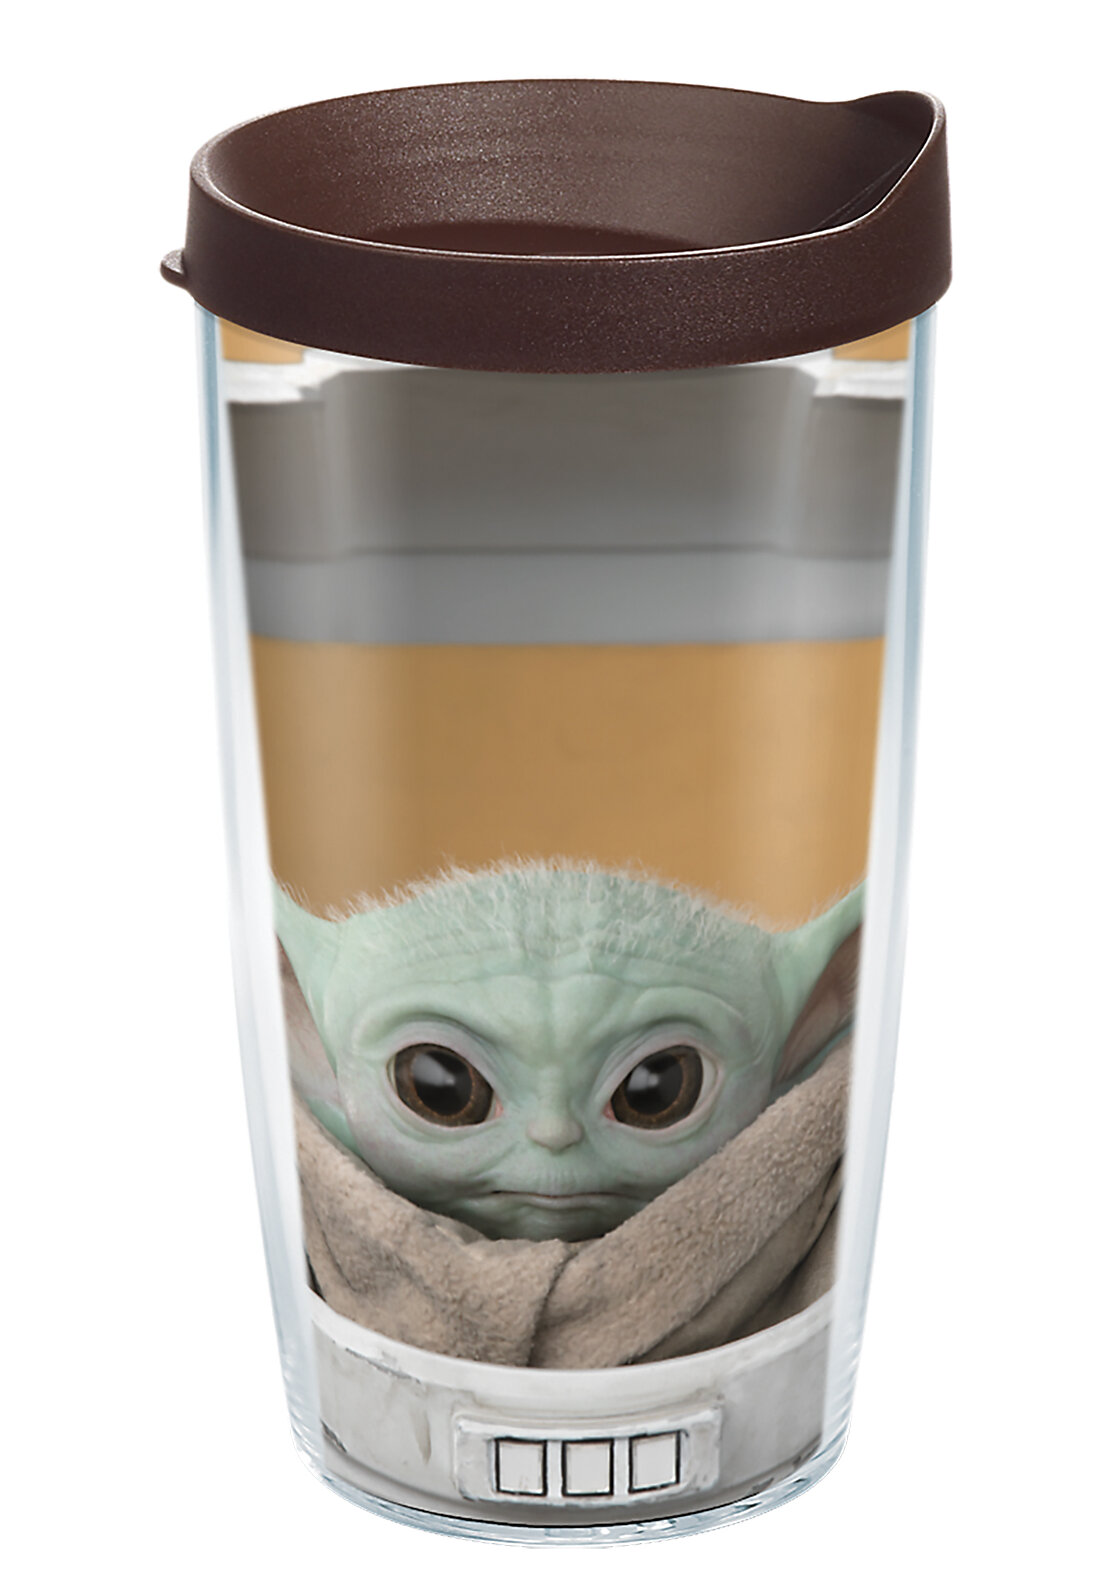 star wars tumbler cup